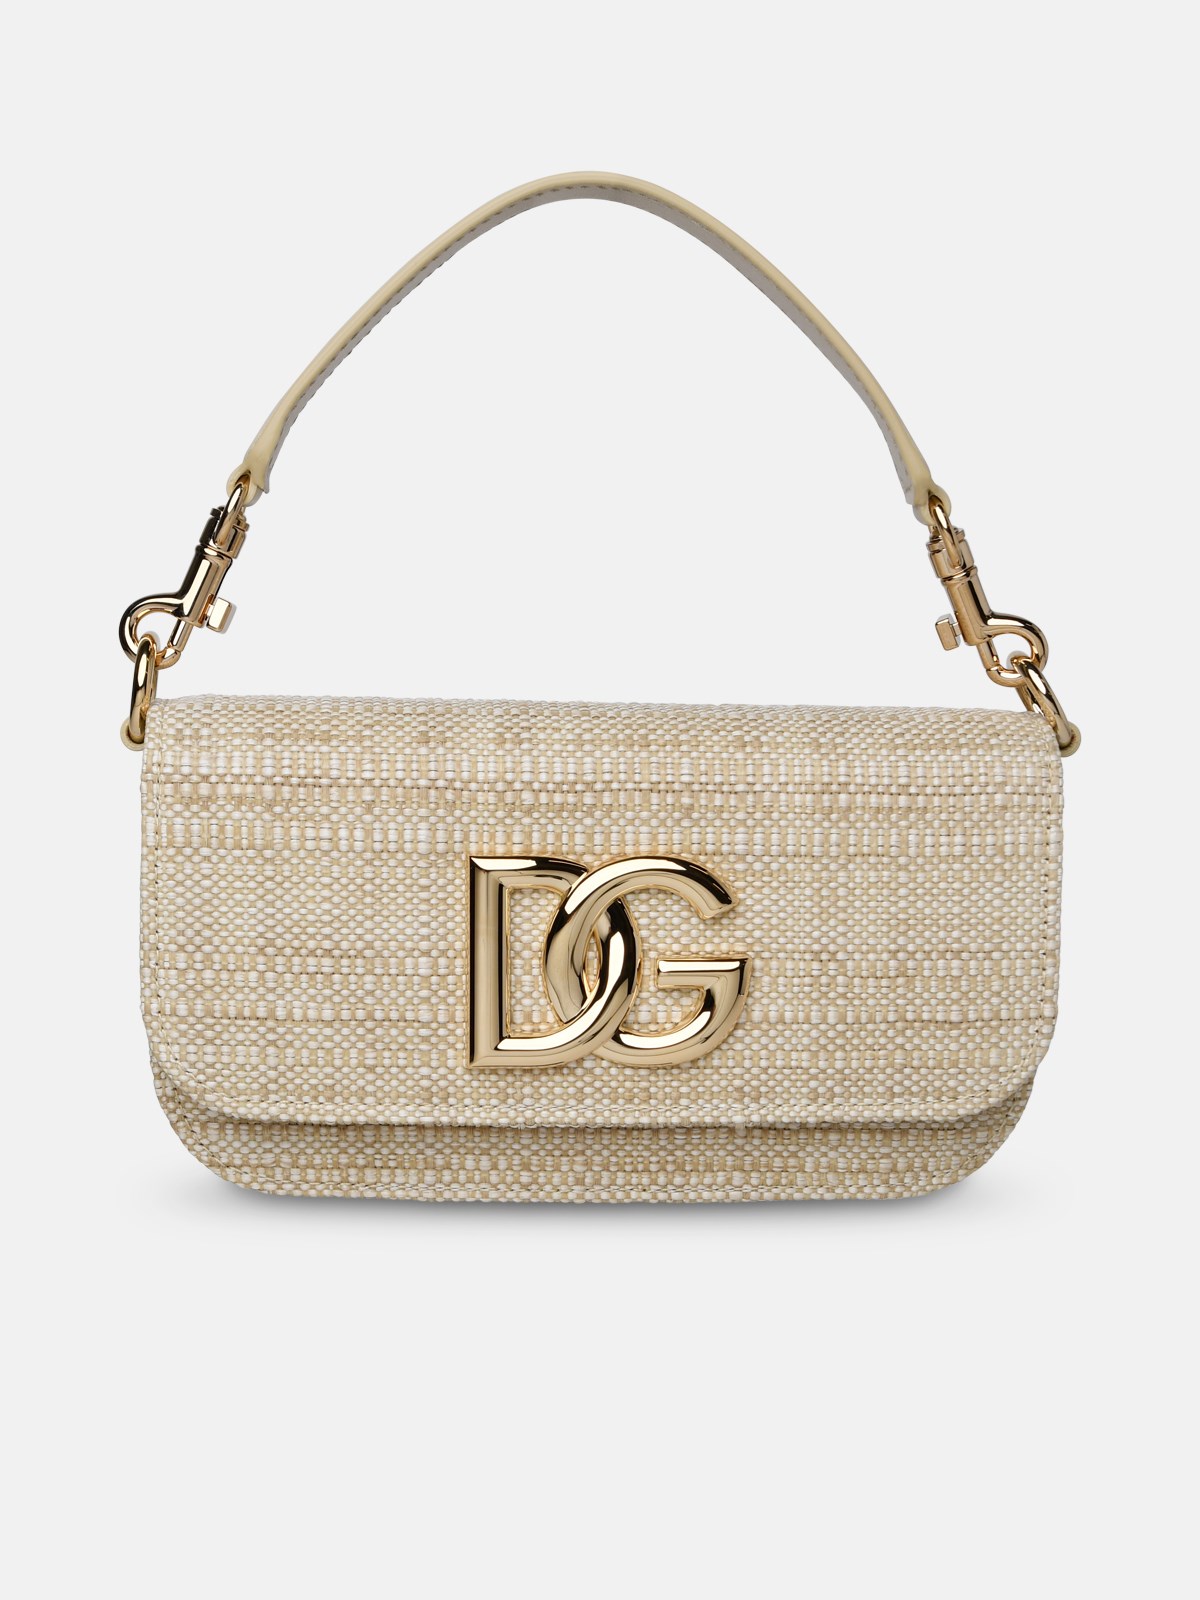 Dolce & Gabbana Beige Fabric Bag